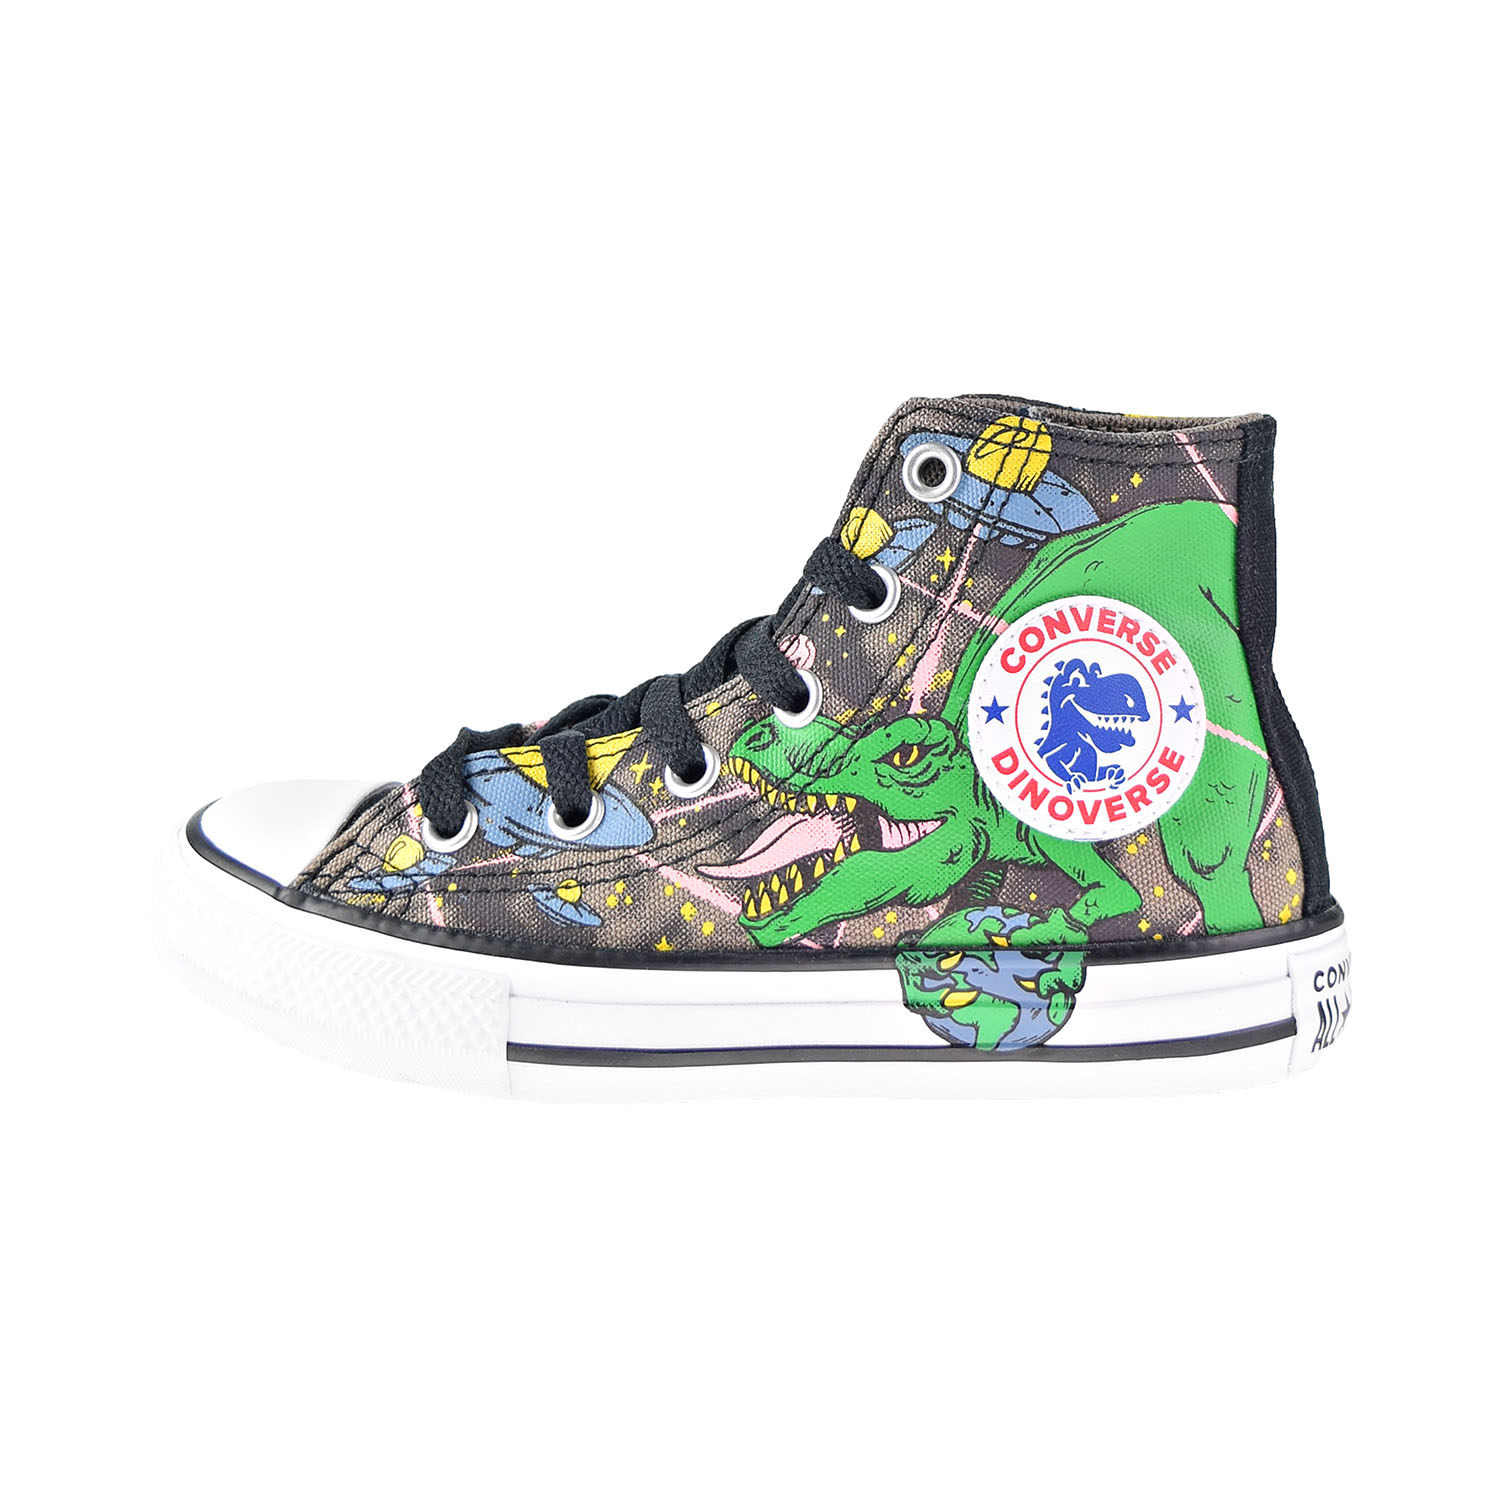 Converse Chuck Taylor All Star Hi Dinosaur Kids' Shoes Mason Taupe 665391C | eBay